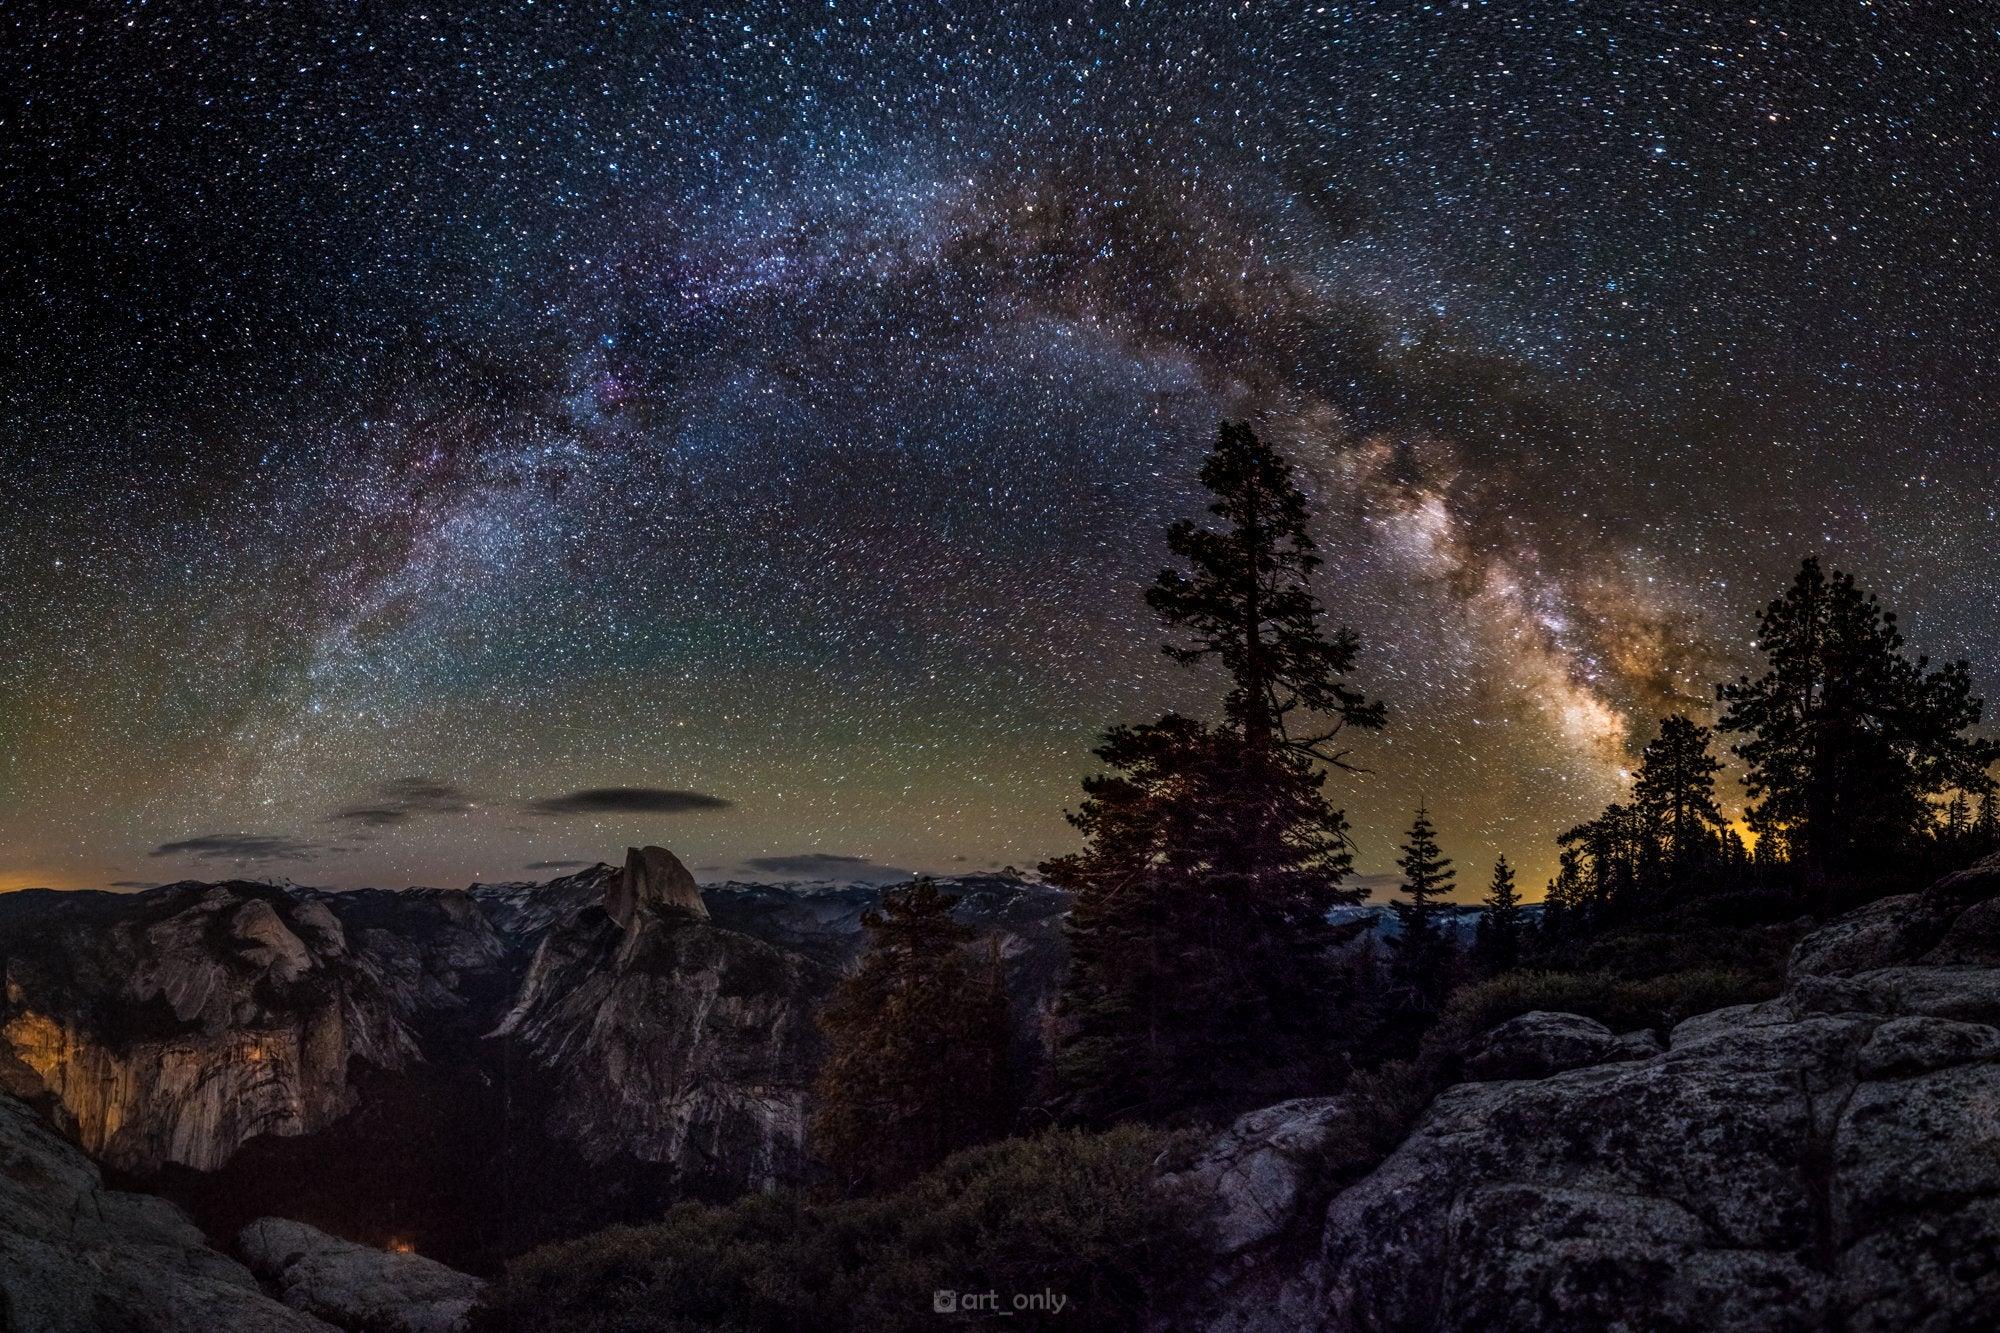 Yosemite National Park looks pretty incredible